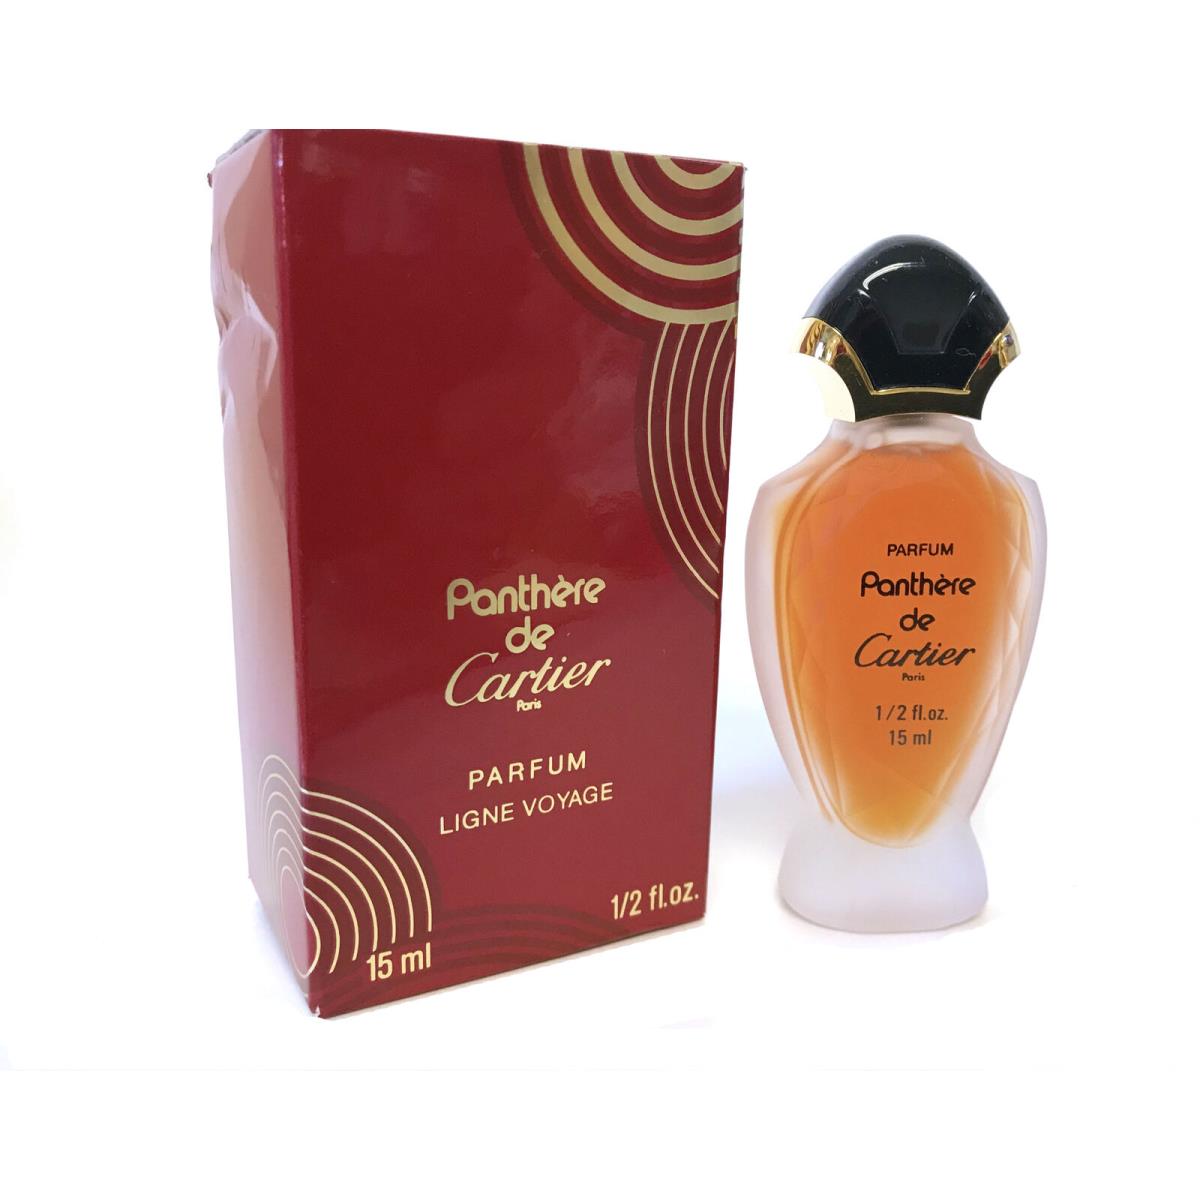 Panthere de Cartier Women Pure Parfum Splash 0.5 oz / 15 ml - in Worn Box